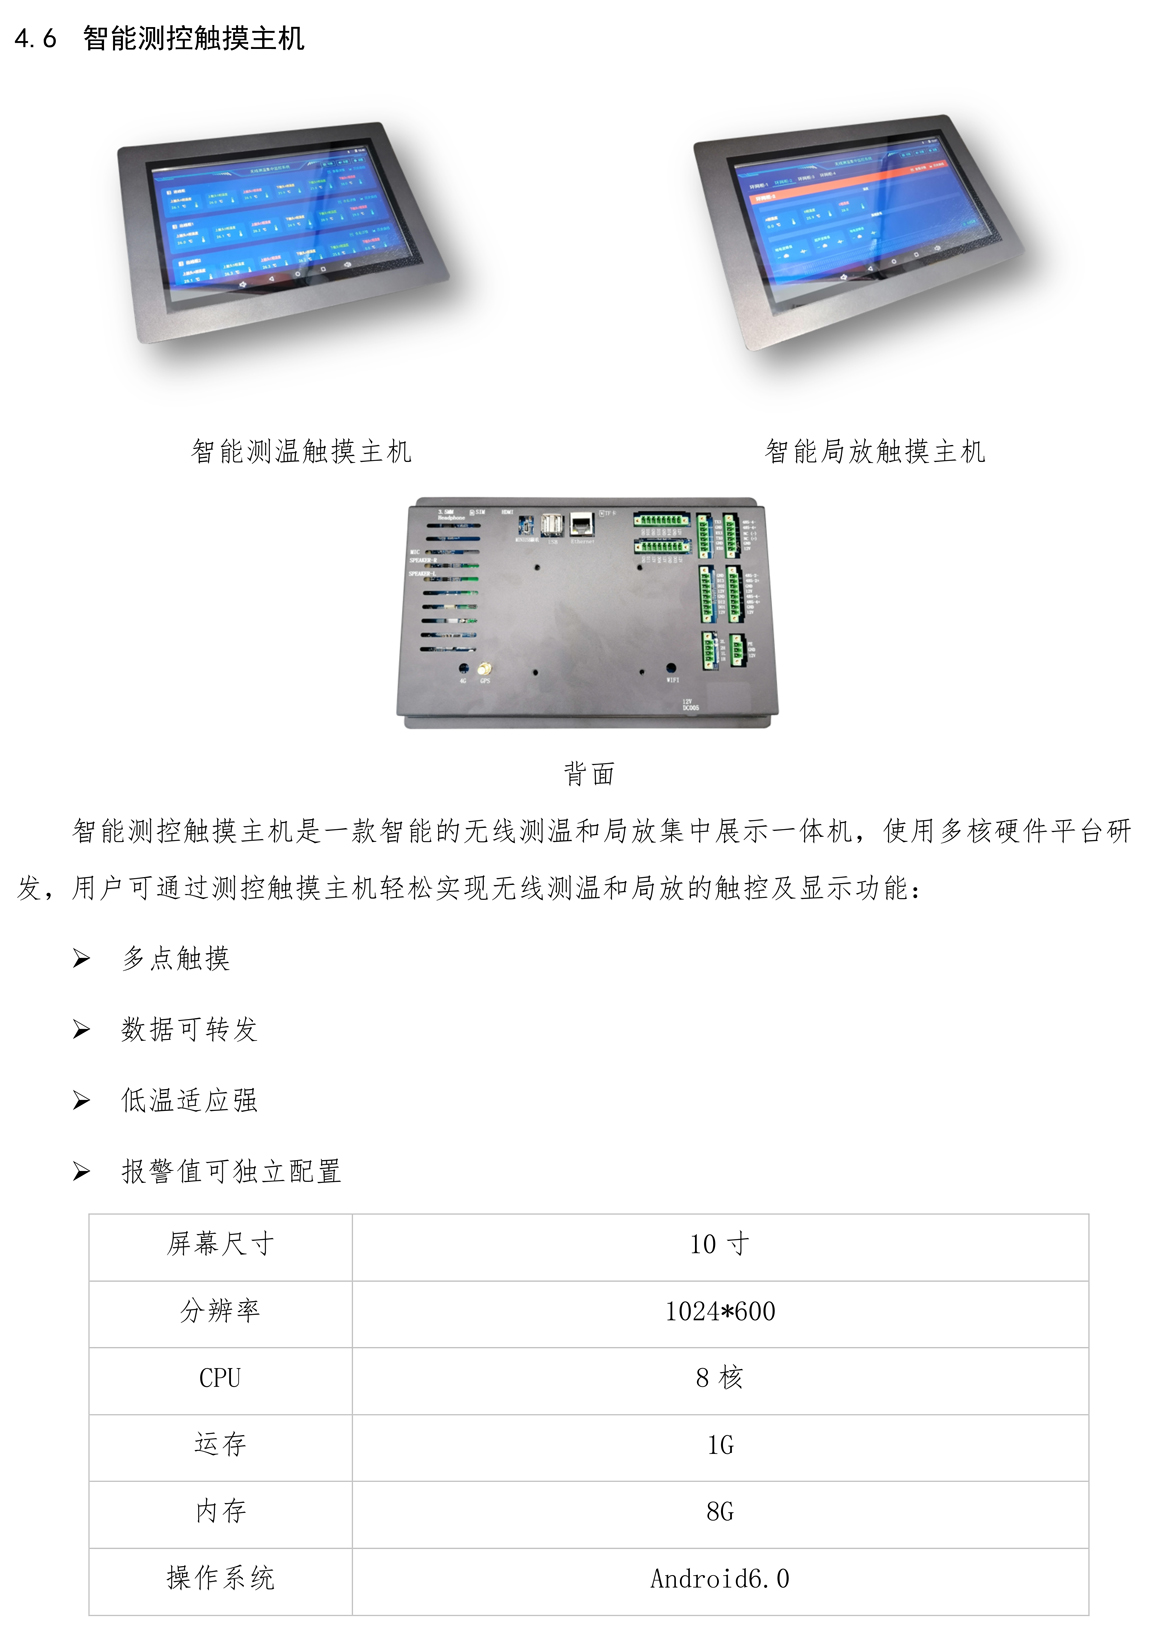 YQK-1500智能测控触摸主机说明书(1)_12.jpg